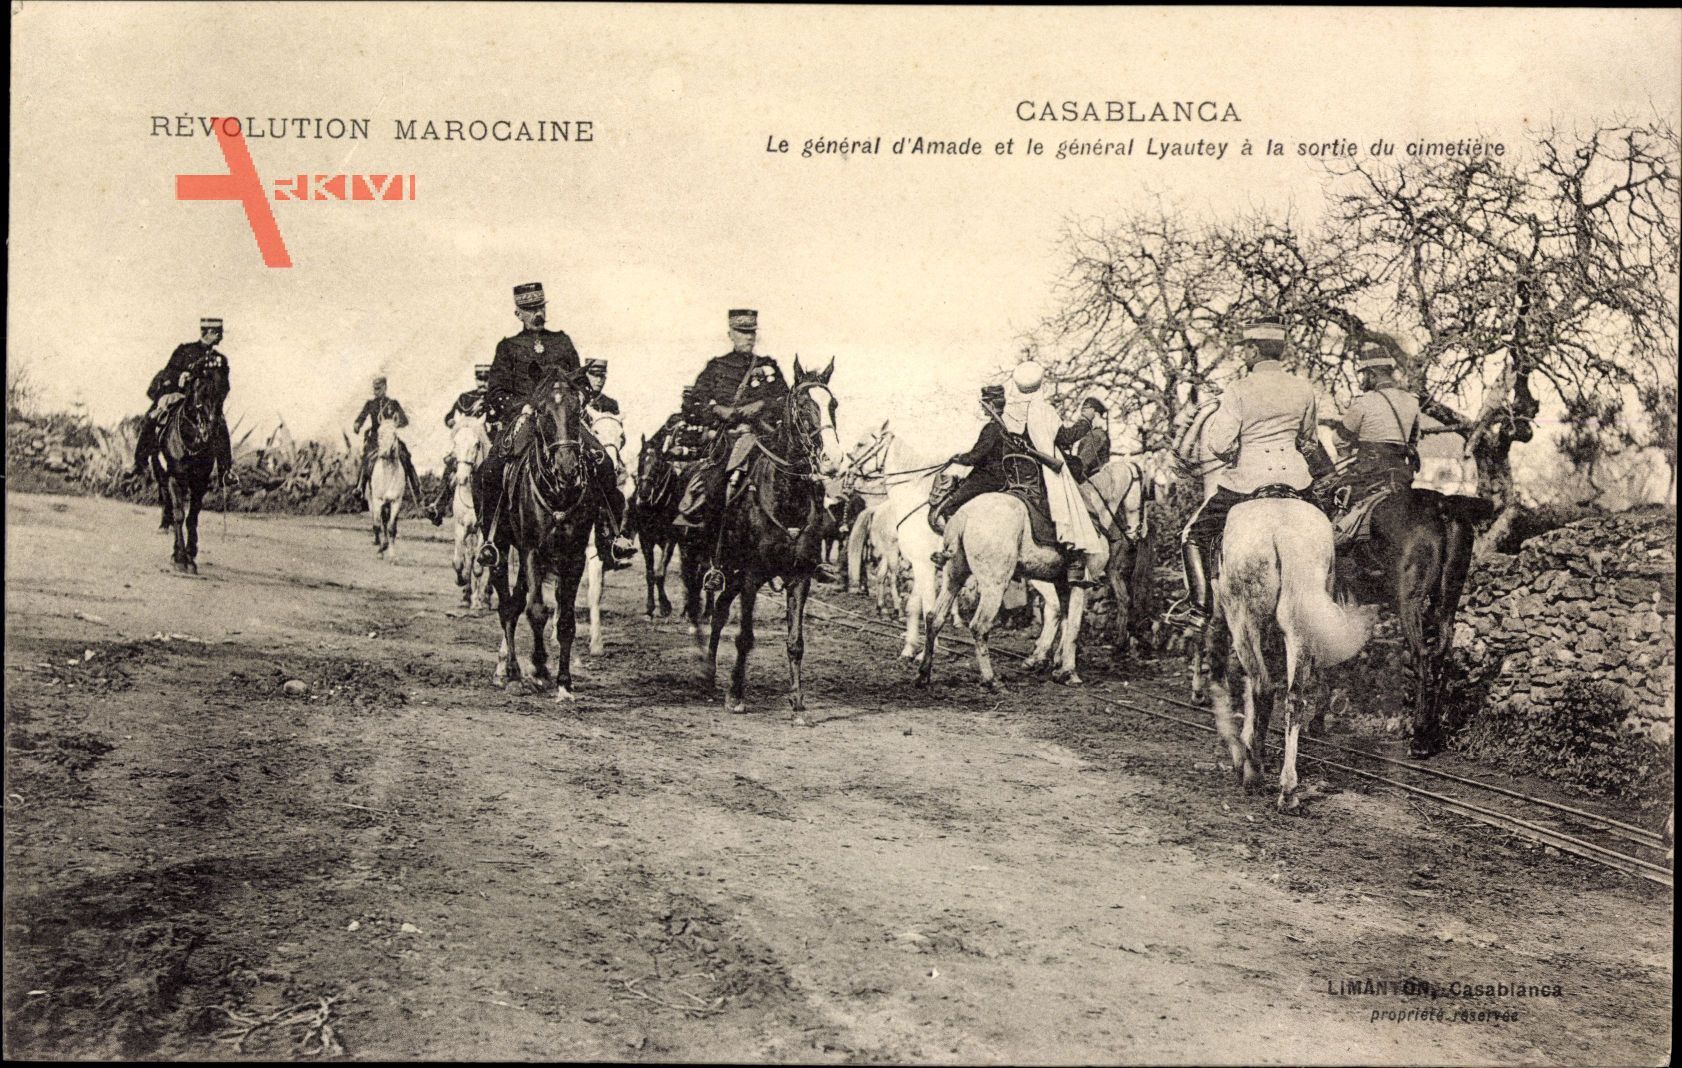 Casablanca Marokko, Le général dAmade, et le général Lyautey